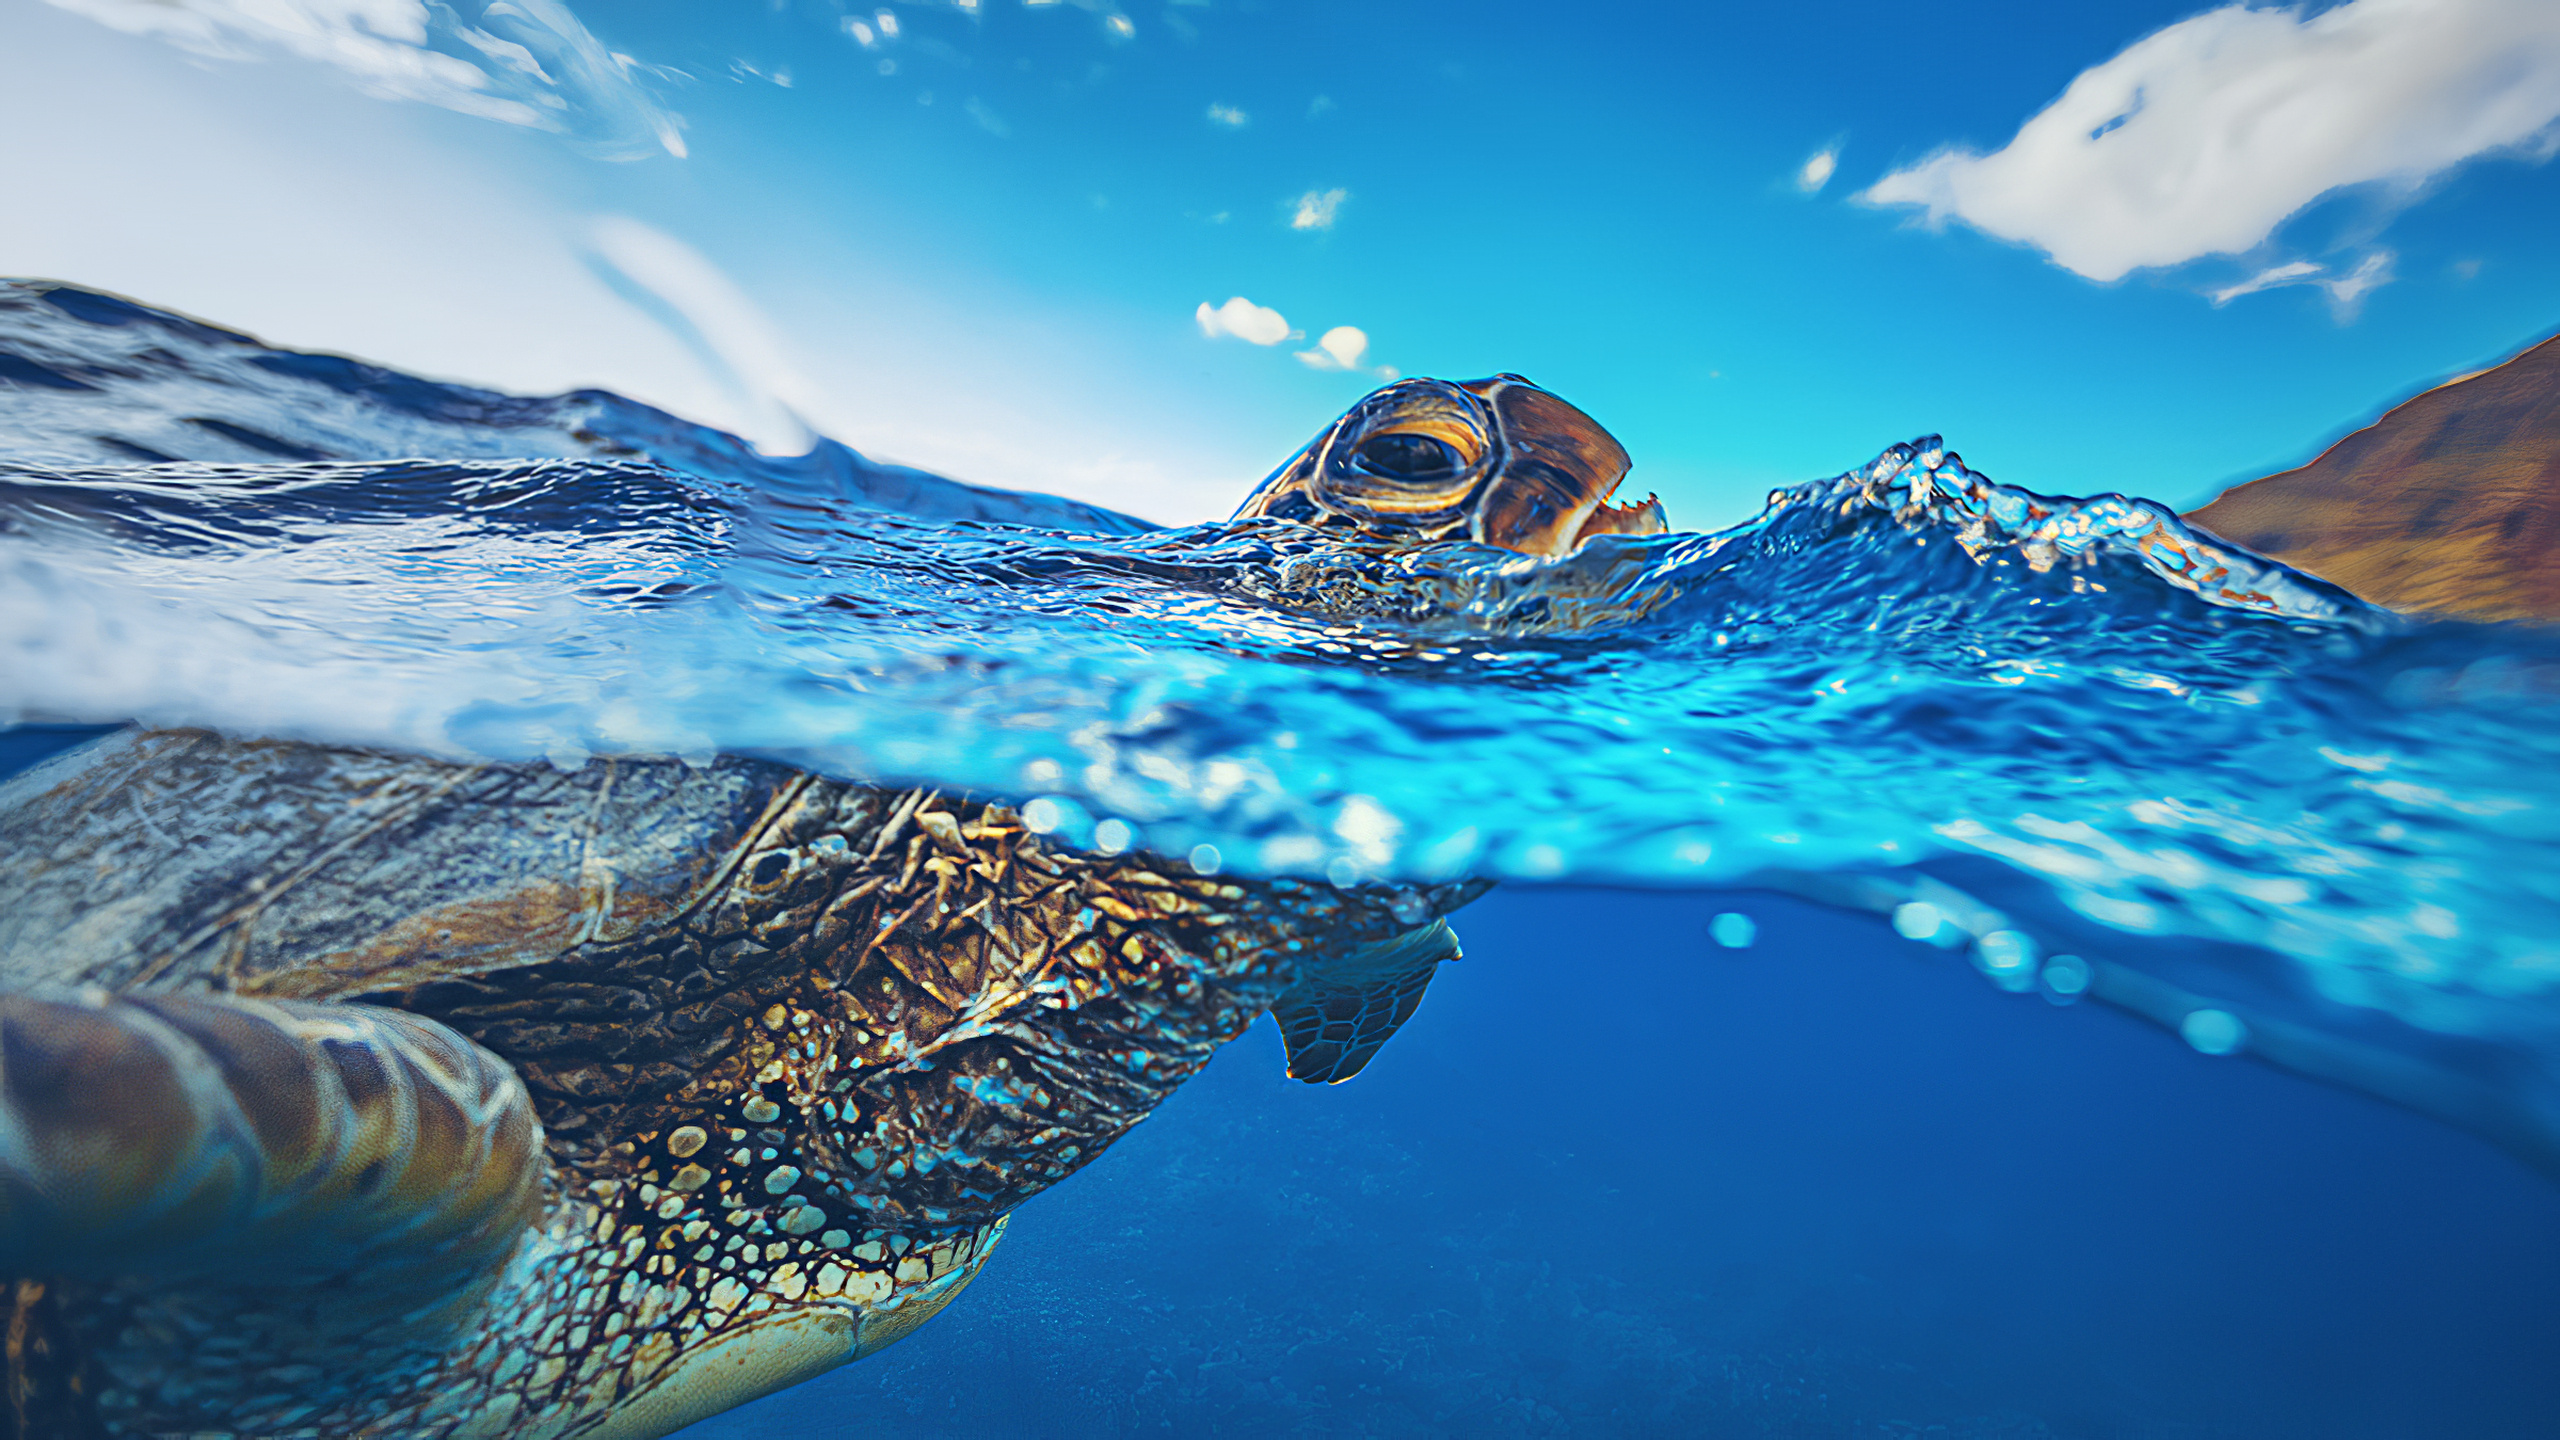 General 2560x1440 turtle wildlife water underwater closeup